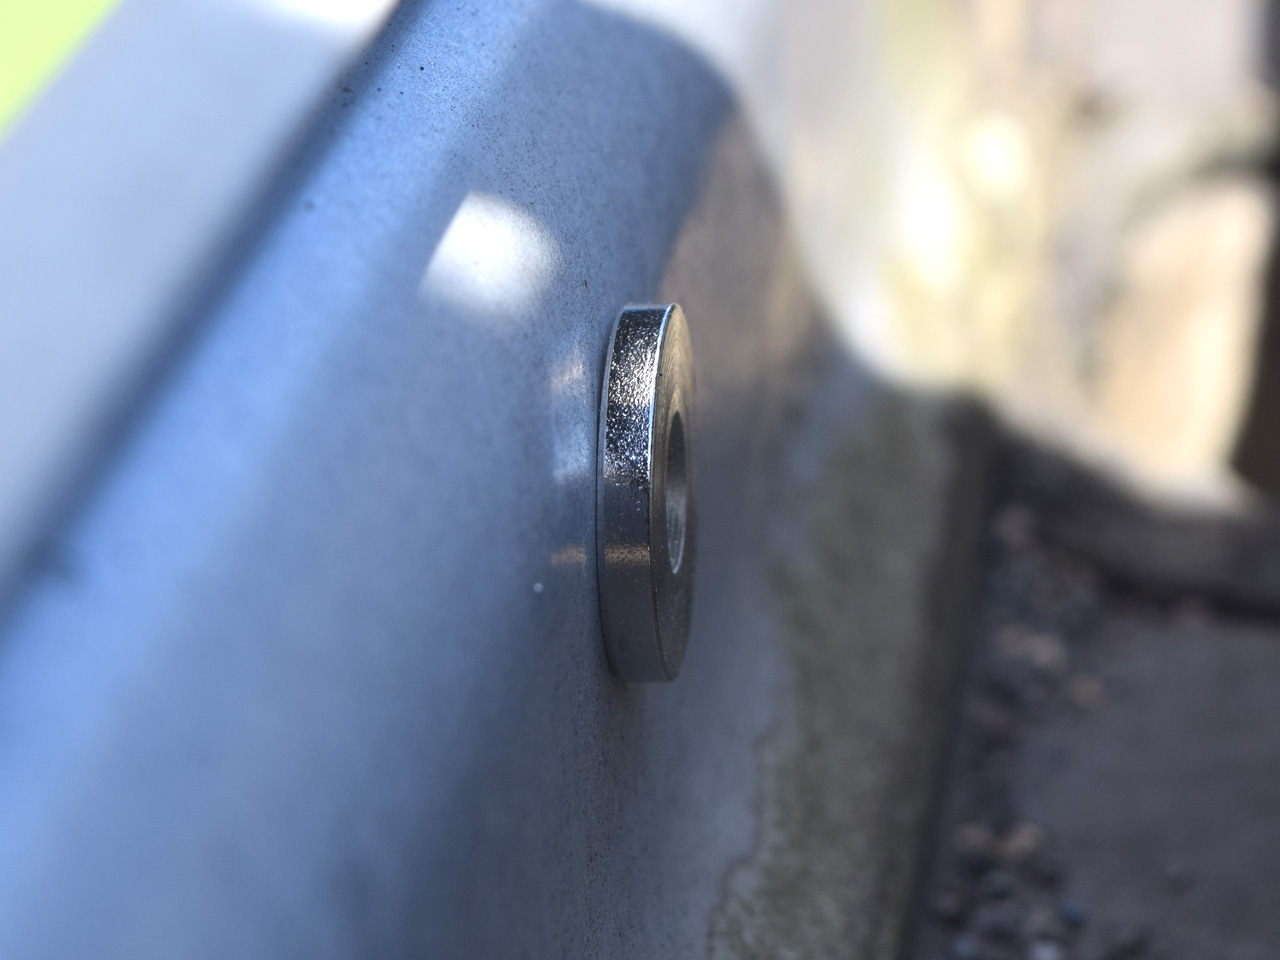 Magnet stuck to inside of gutter